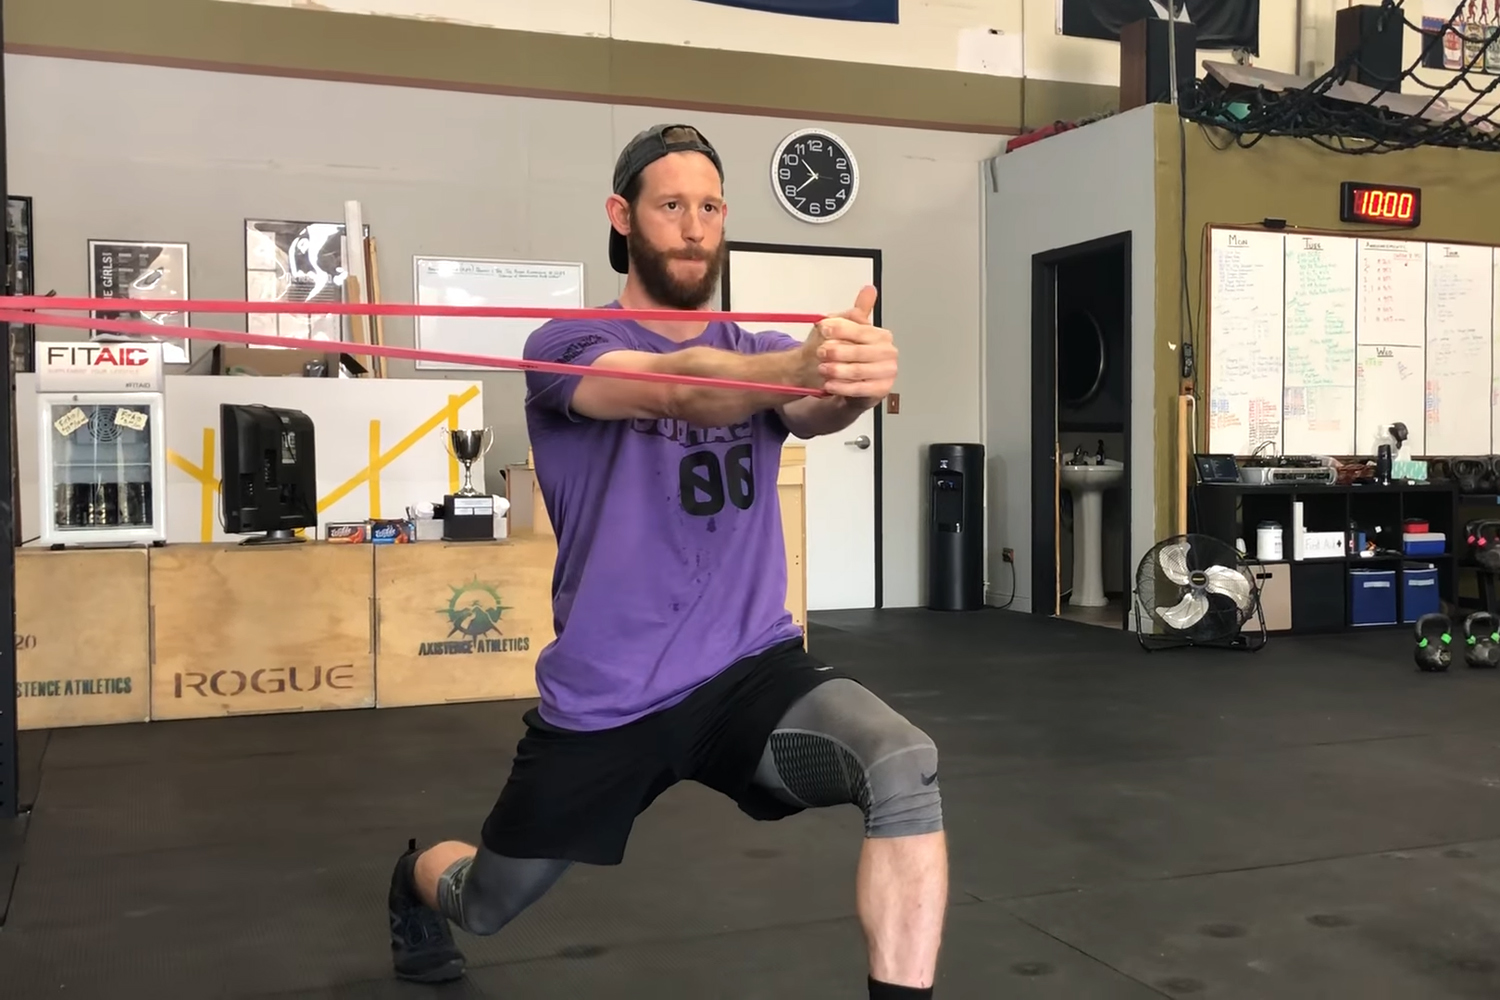 How to Do a pilates single leg stretch « Pilates :: WonderHowTo